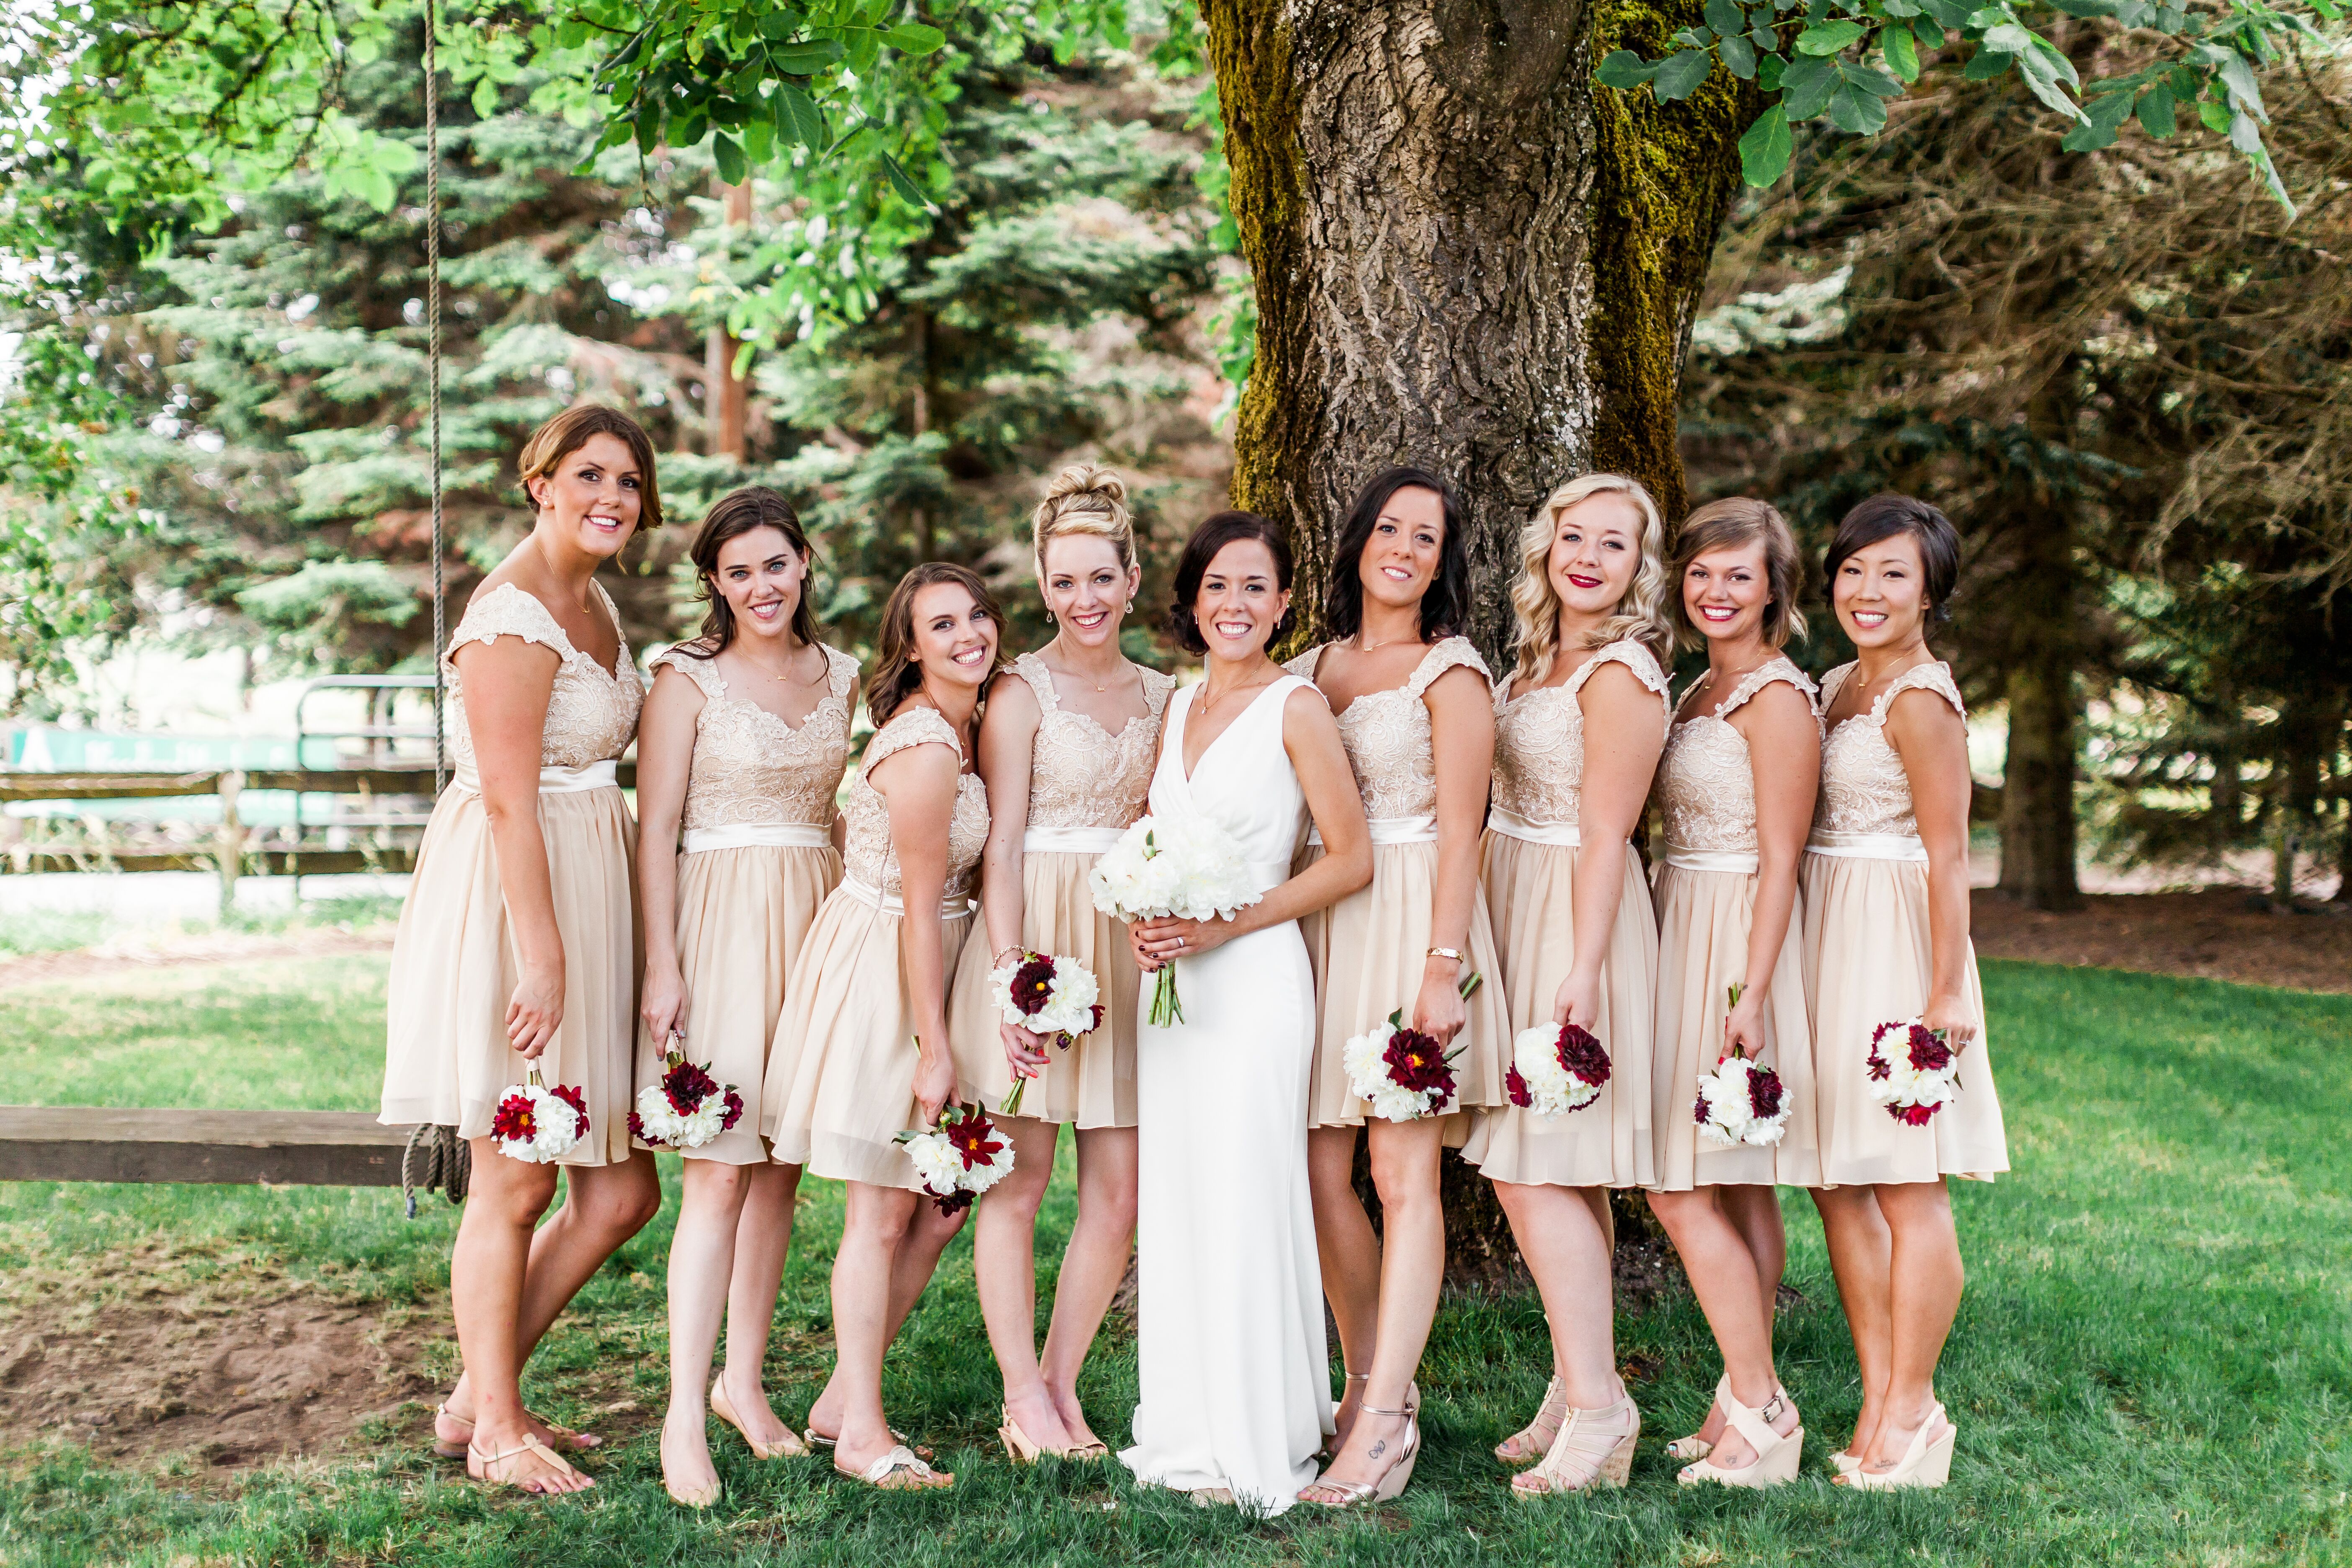 neutral color bridesmaid dresses